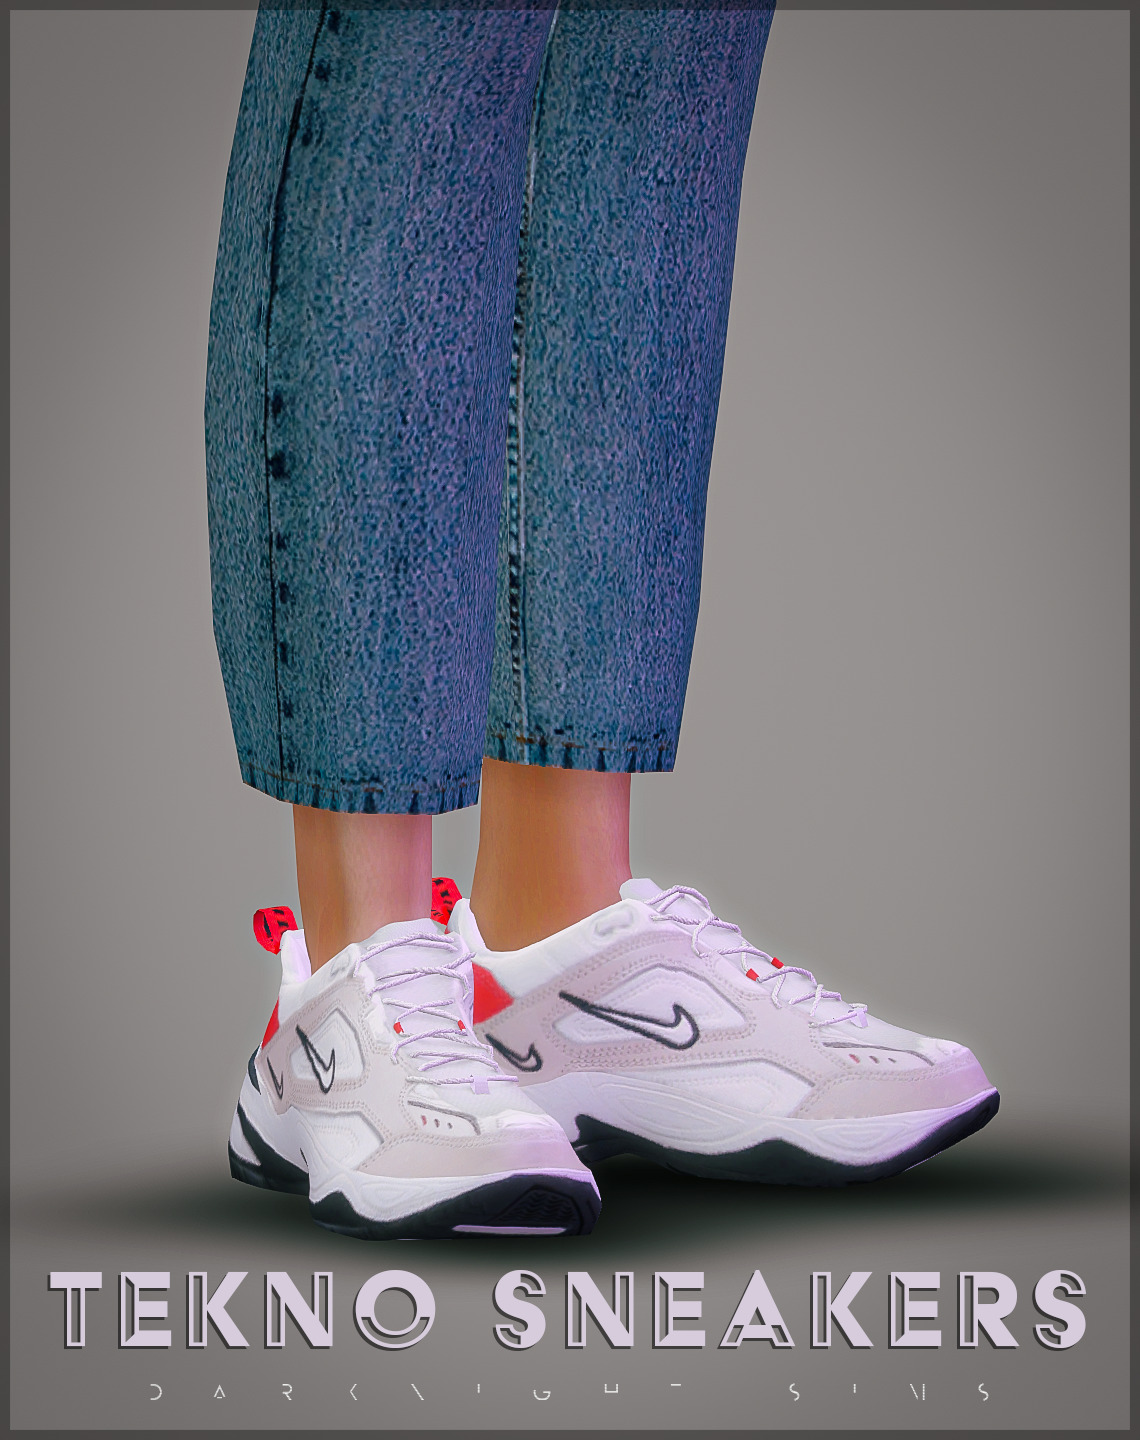 DarkNight Sims — Tekno Sneakers Hi! I've made a new Nike Tekno...